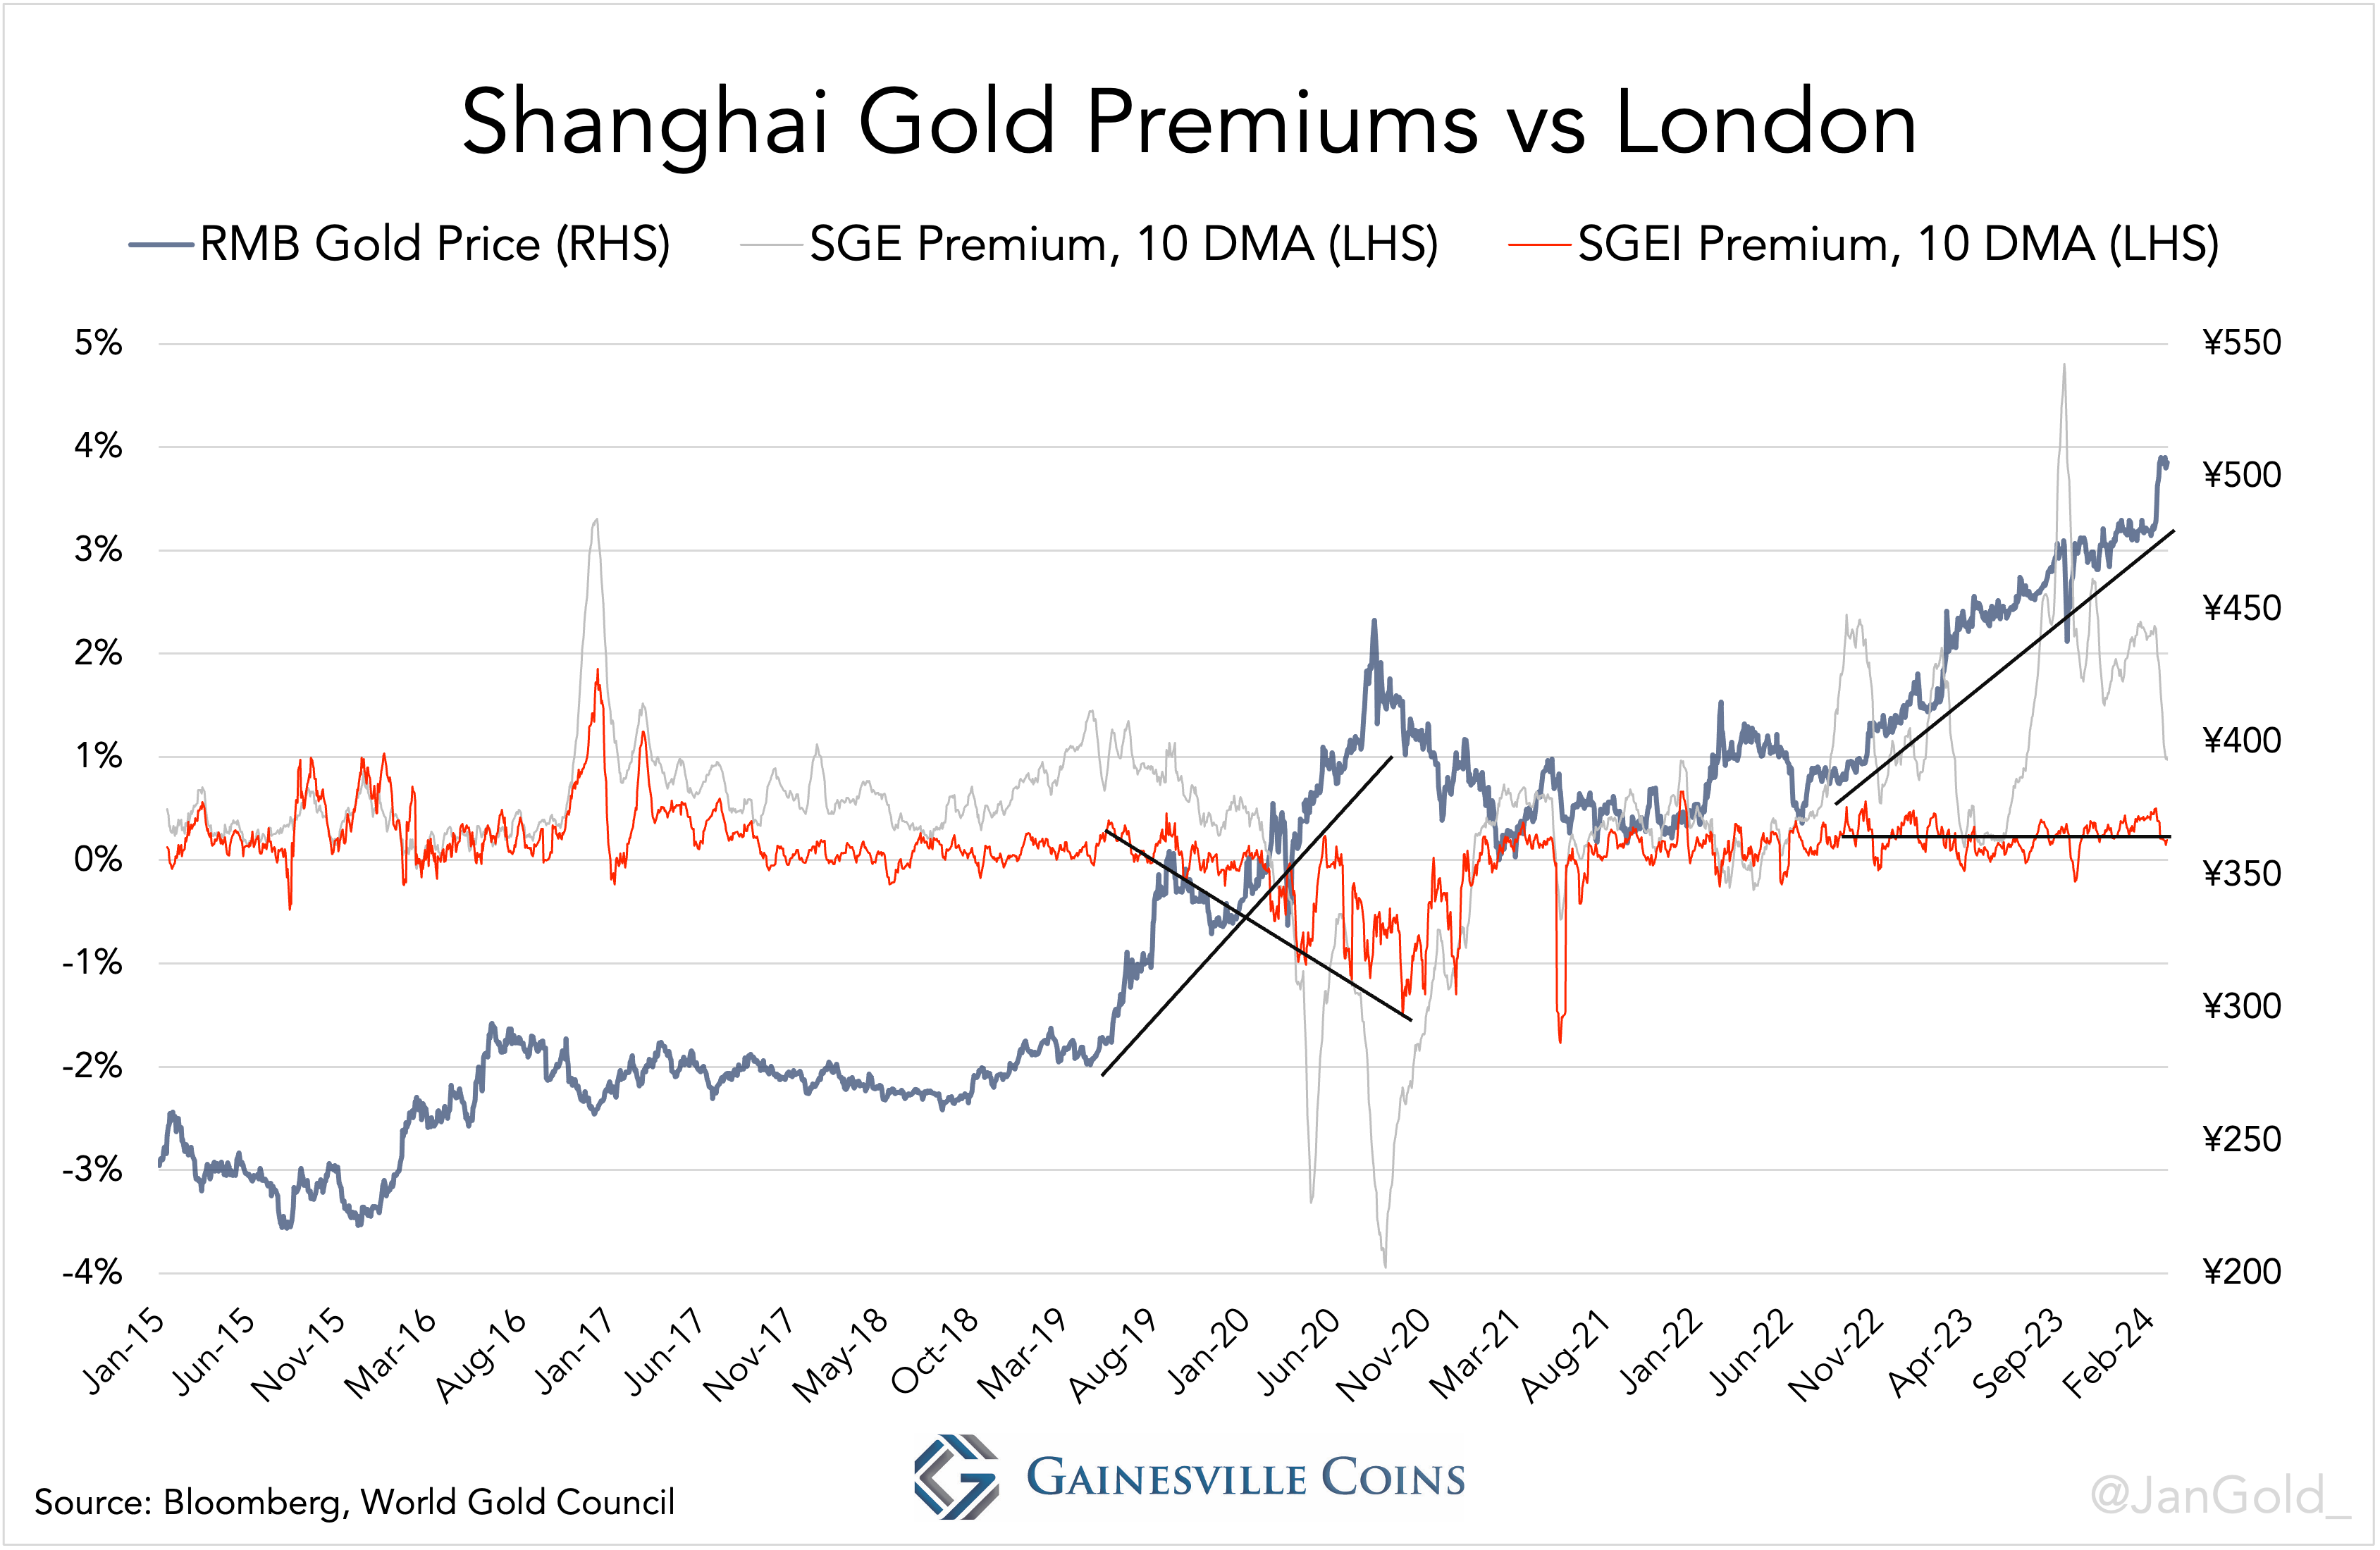 Shanghai Gold Premiums vs London